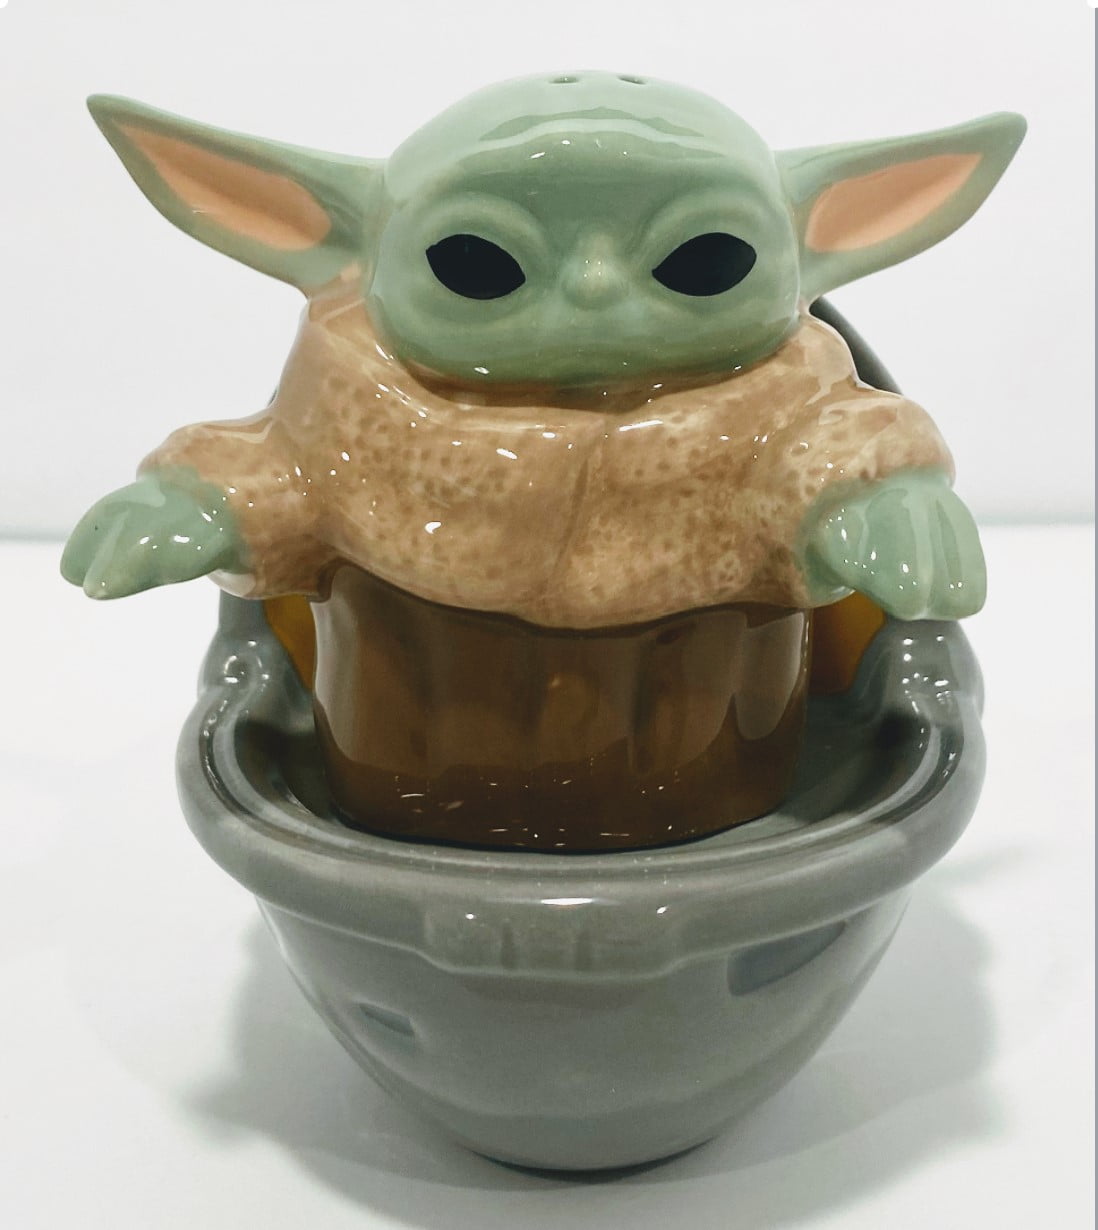  Best Brands Star Wars Ceramic Salt and Pepper Shaker Set –  Death Star Shaped Ceramic Pots for Salt, Pepper, Spices, & Seasonings -  Easy: Home & Kitchen